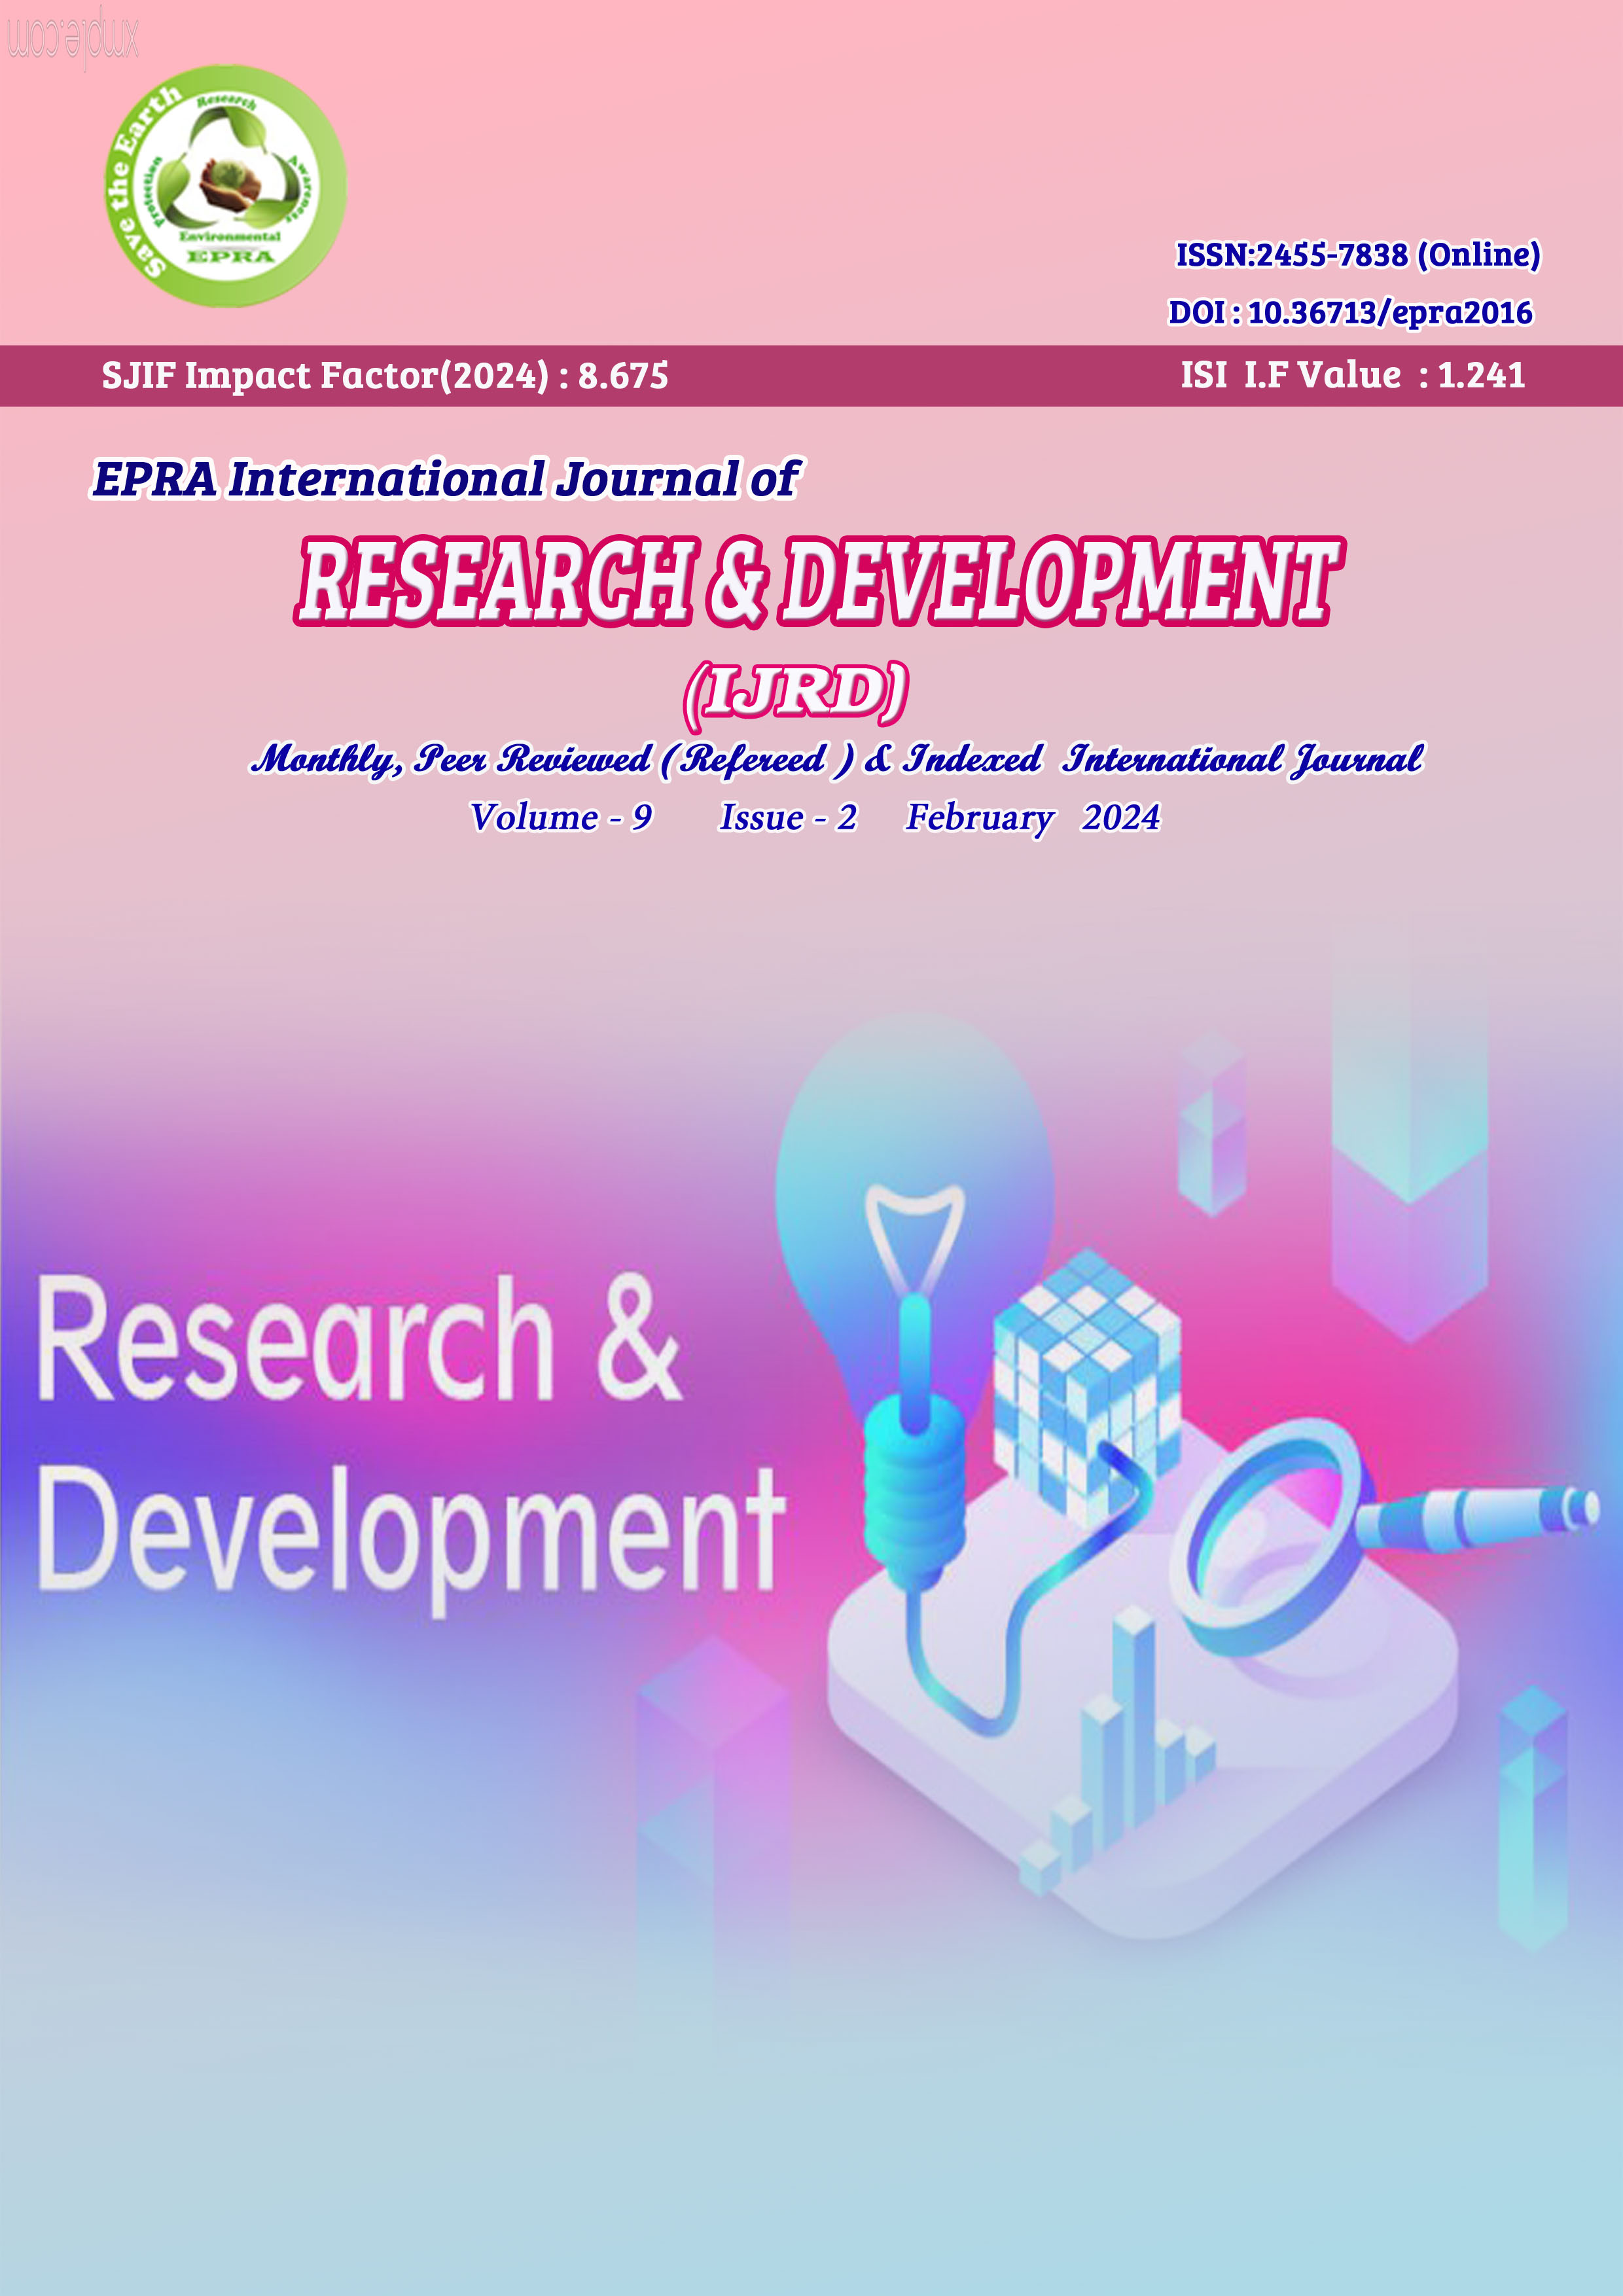 EPRA International Journal of Research & Development (IJRD)